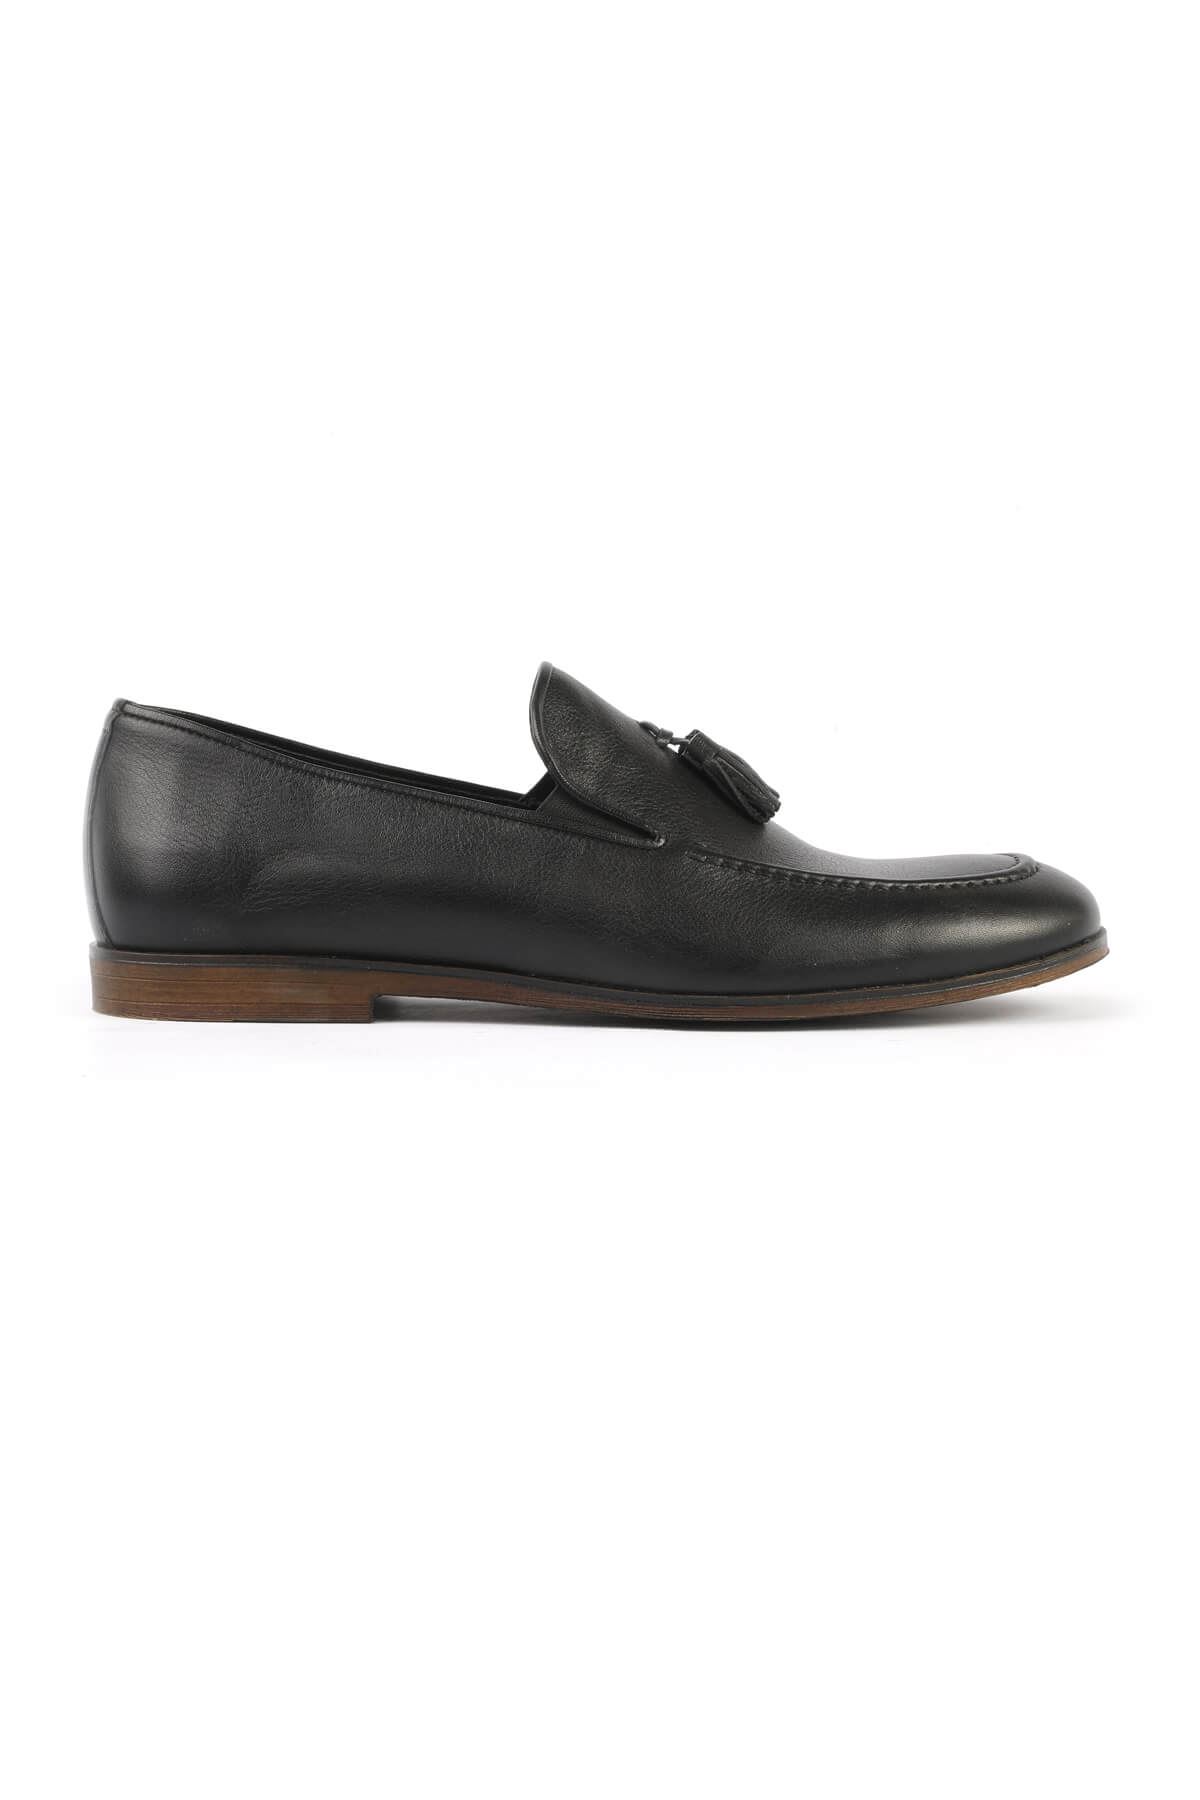 Libero C165 Black Loafer Shoes